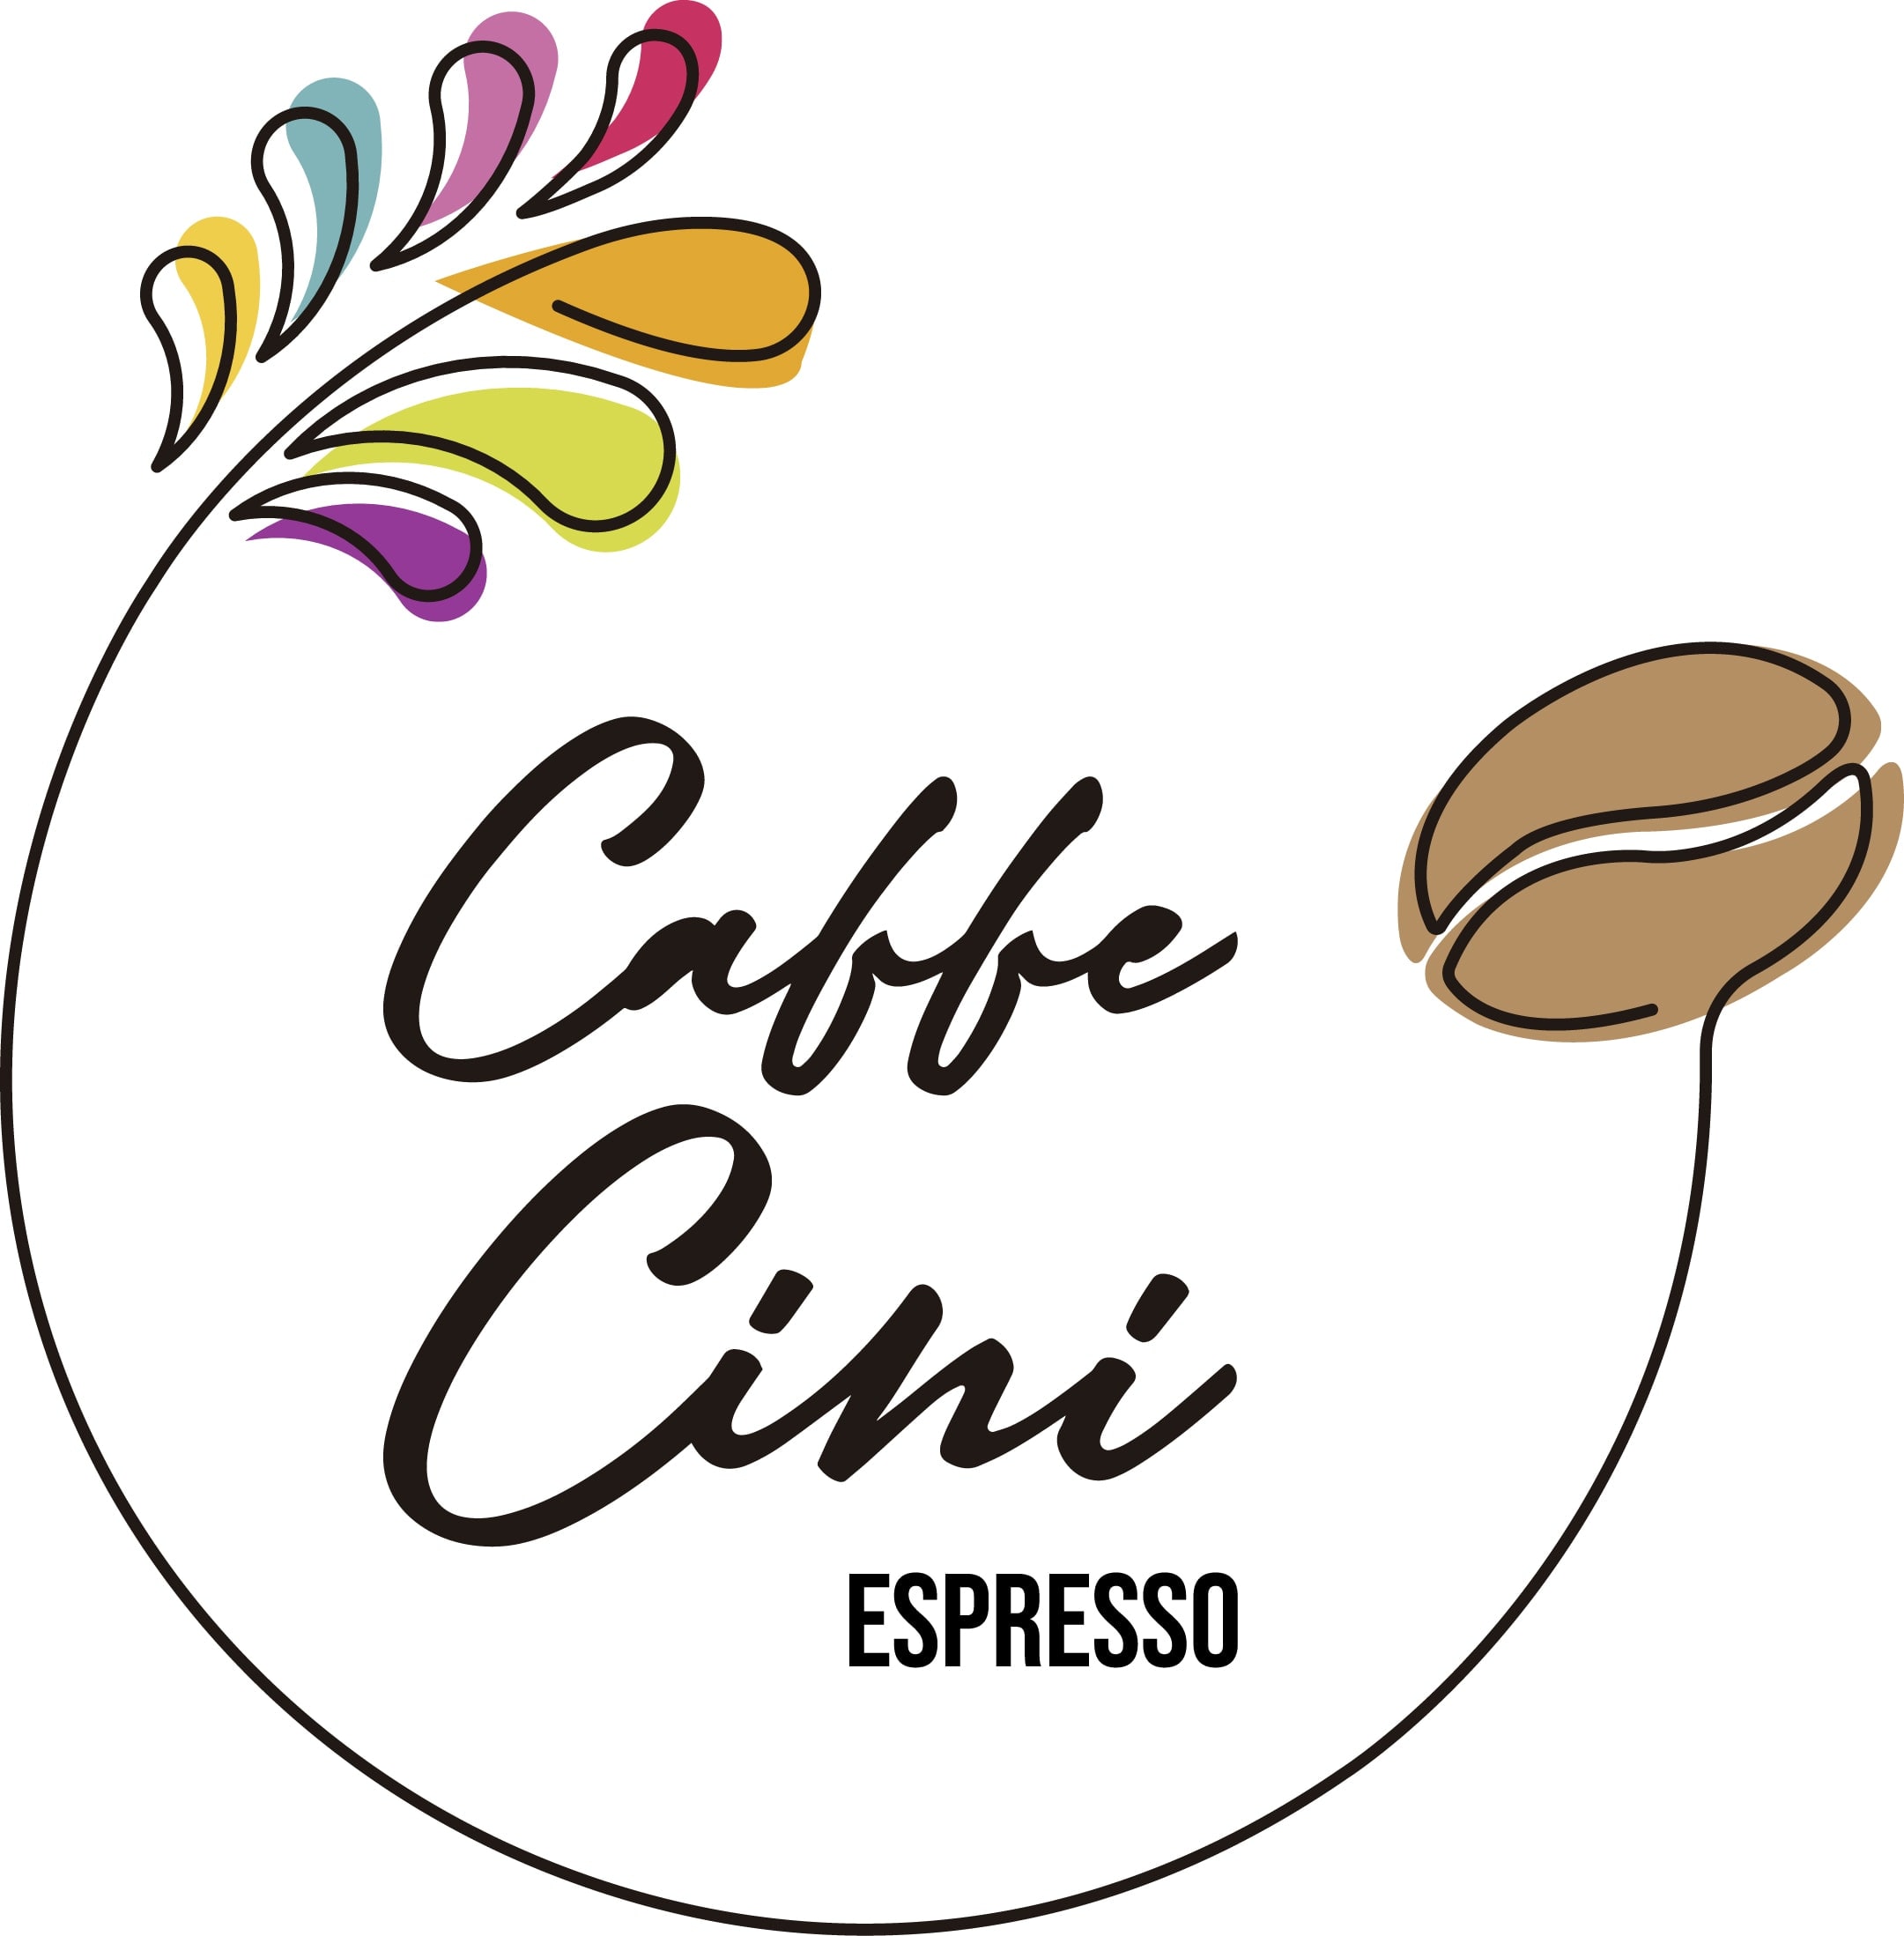 El Caffe Cini Espresso